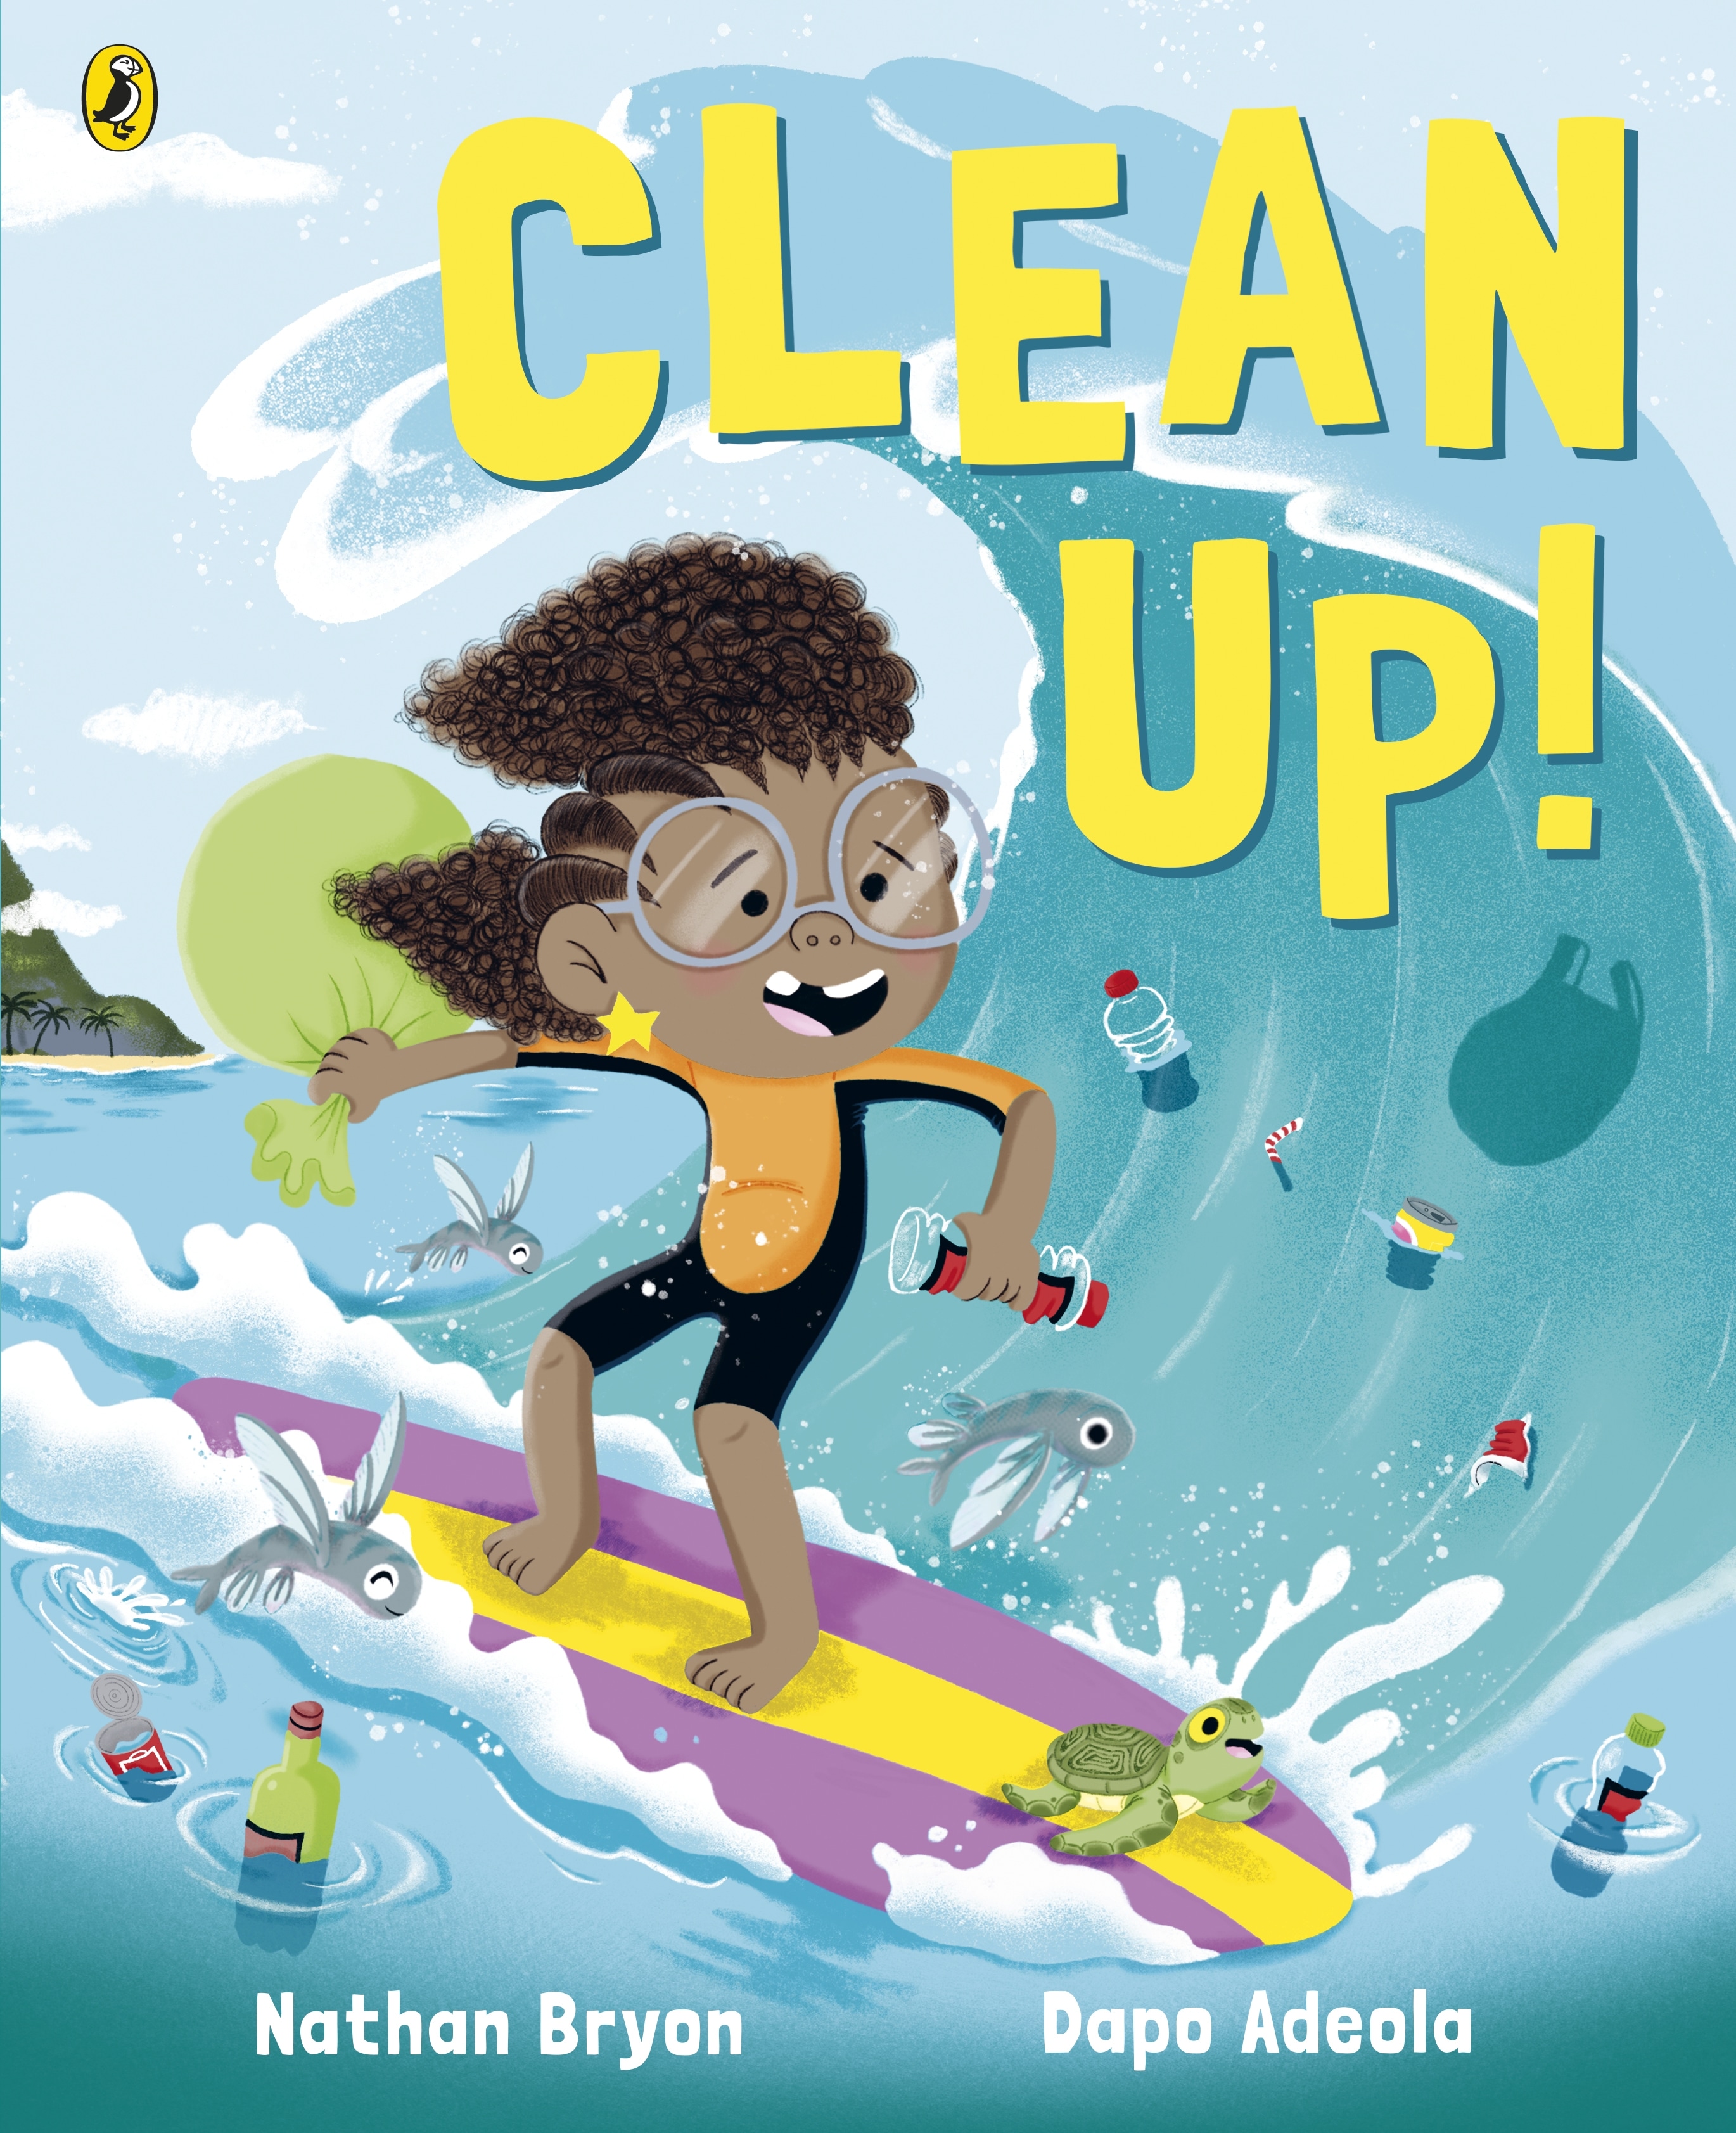 Book “Clean Up!” by Nathan Bryon, Dapo Adeola — July 23, 2020